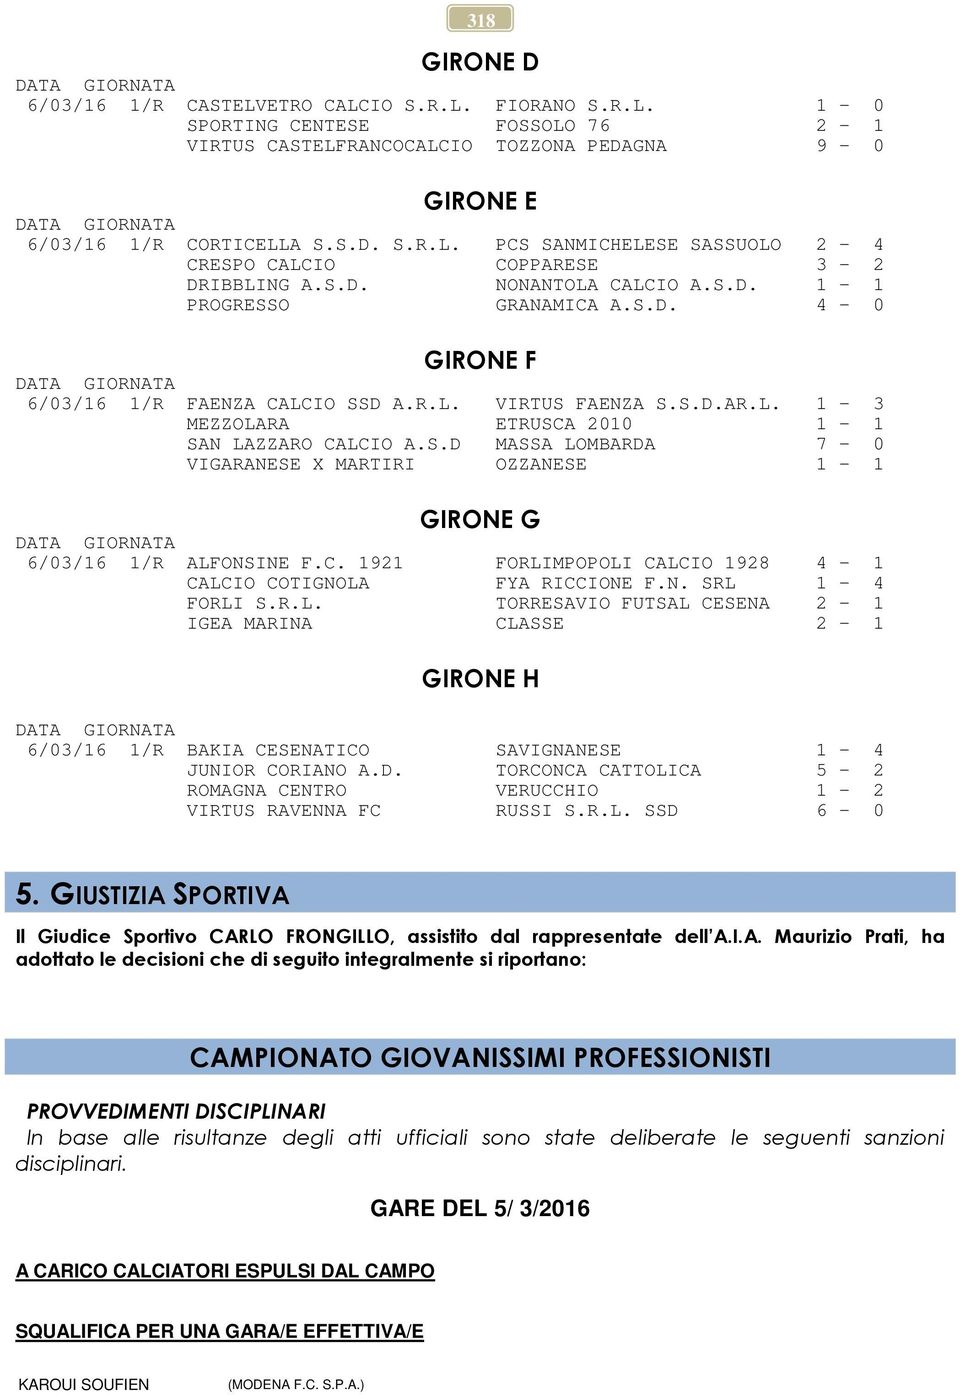 C. 1921 FORLIMPOPOLI CALCIO 1928 4-1 CALCIO COTIGNOLA FYA RICCIONE F.N. SRL 1-4 FORLI S.R.L. TORRESAVIO FUTSAL CESENA 2-1 IGEA MARINA CLASSE 2-1 GIRONE H 6/03/16 1/R BAKIA CESENATICO SAVIGNANESE 1-4 JUNIOR CORIANO A.